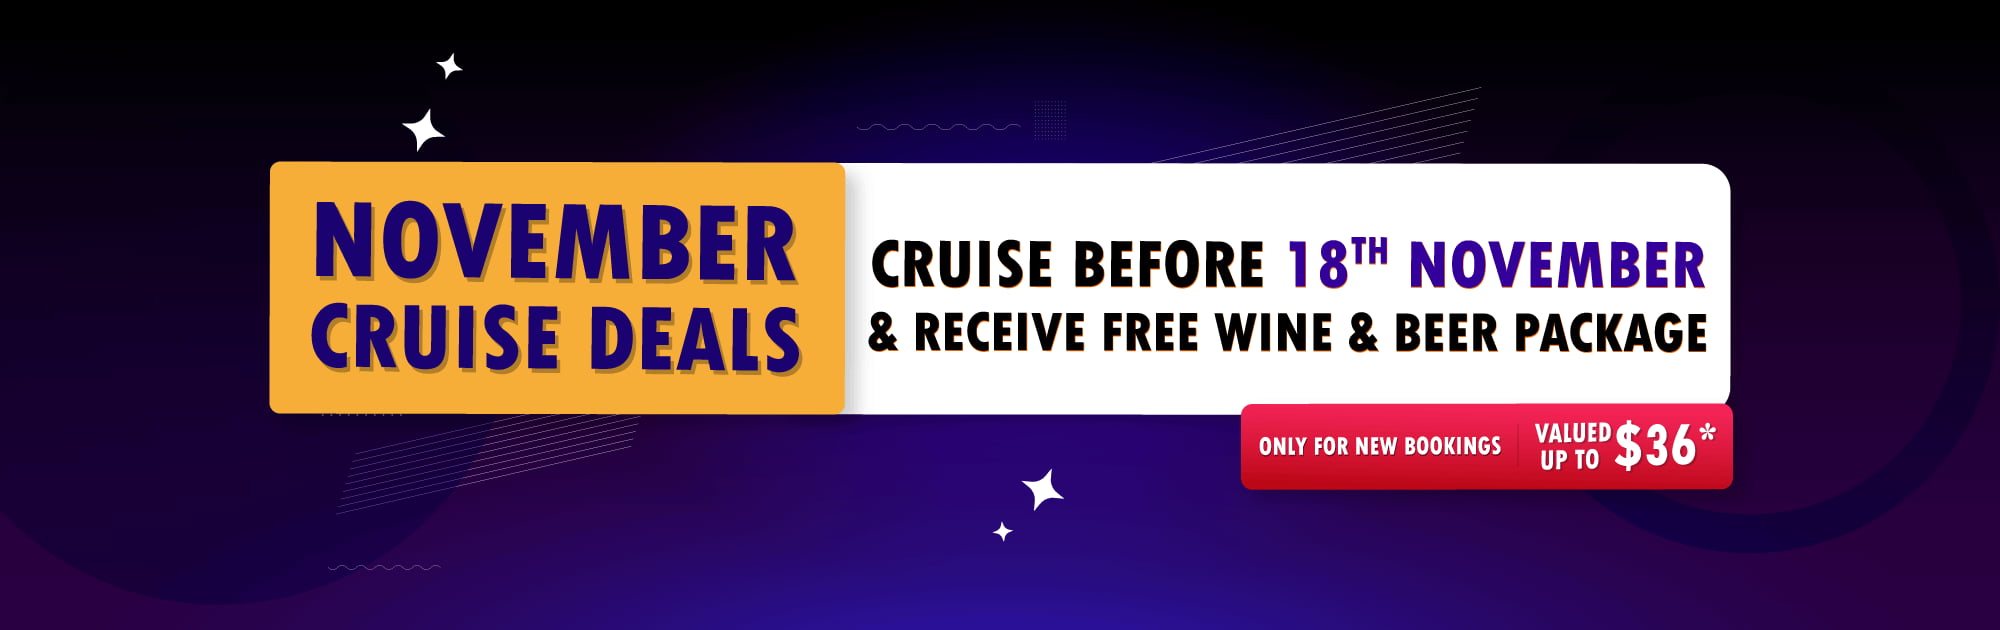 November Cruise Deals